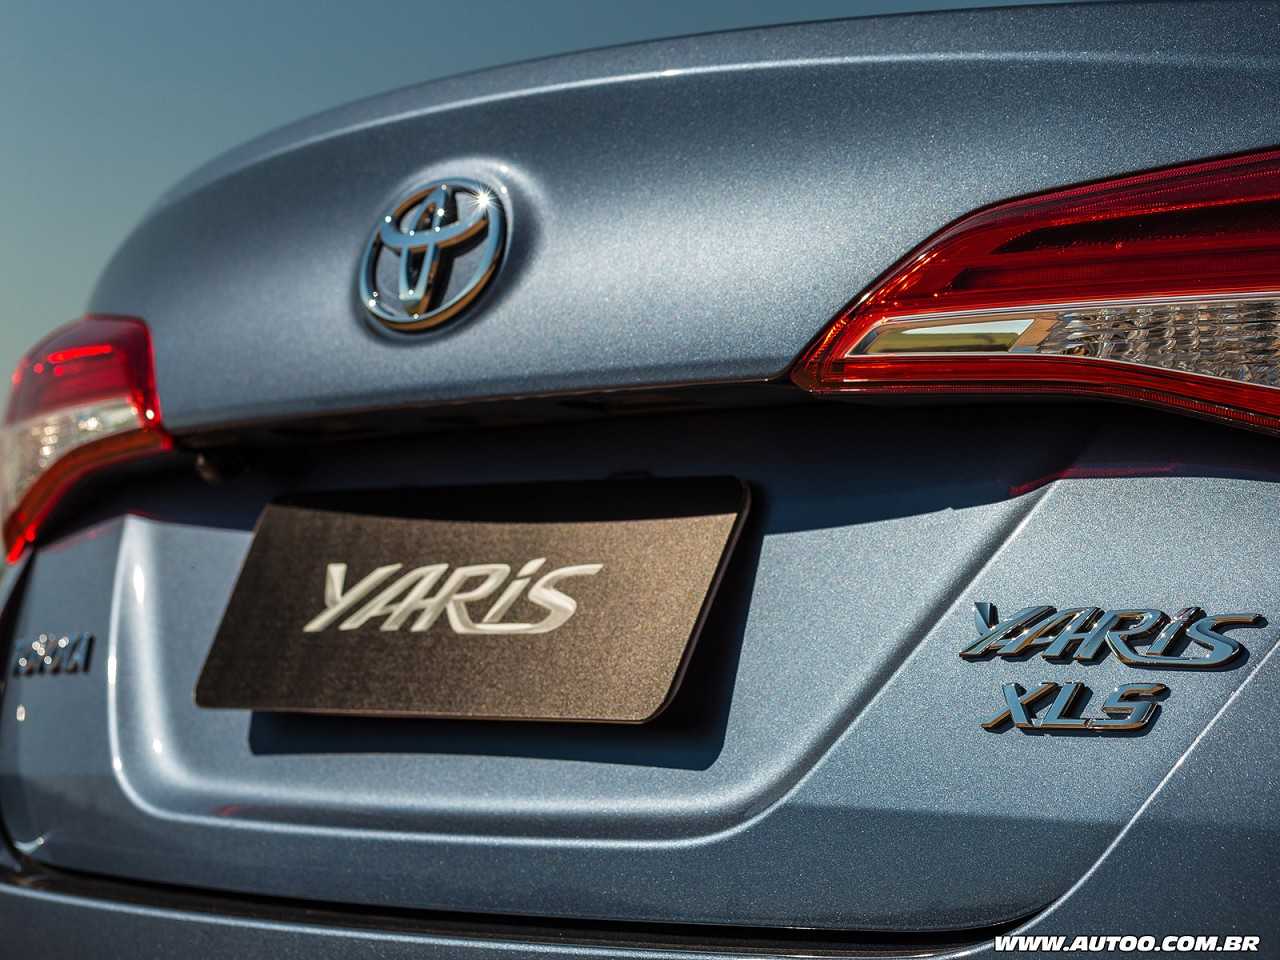 Compro um Toyota Yaris hatch ou o sedã?